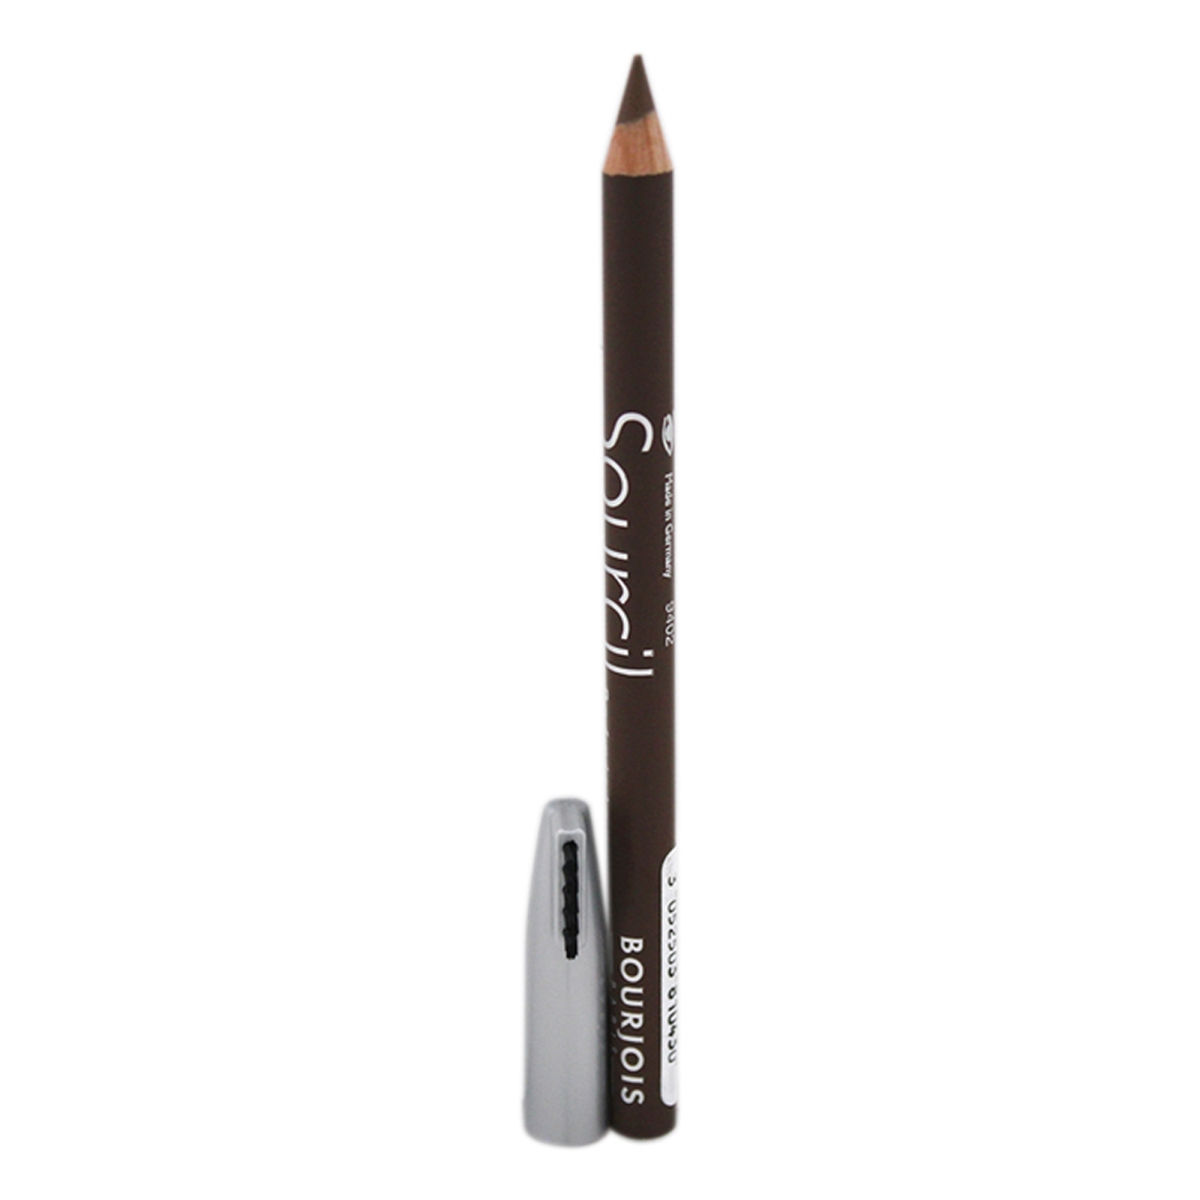 W-c-9695 0.04 Oz No. 04 Sourcil Precision Blond Fonce Eyebrow Pencil For Women